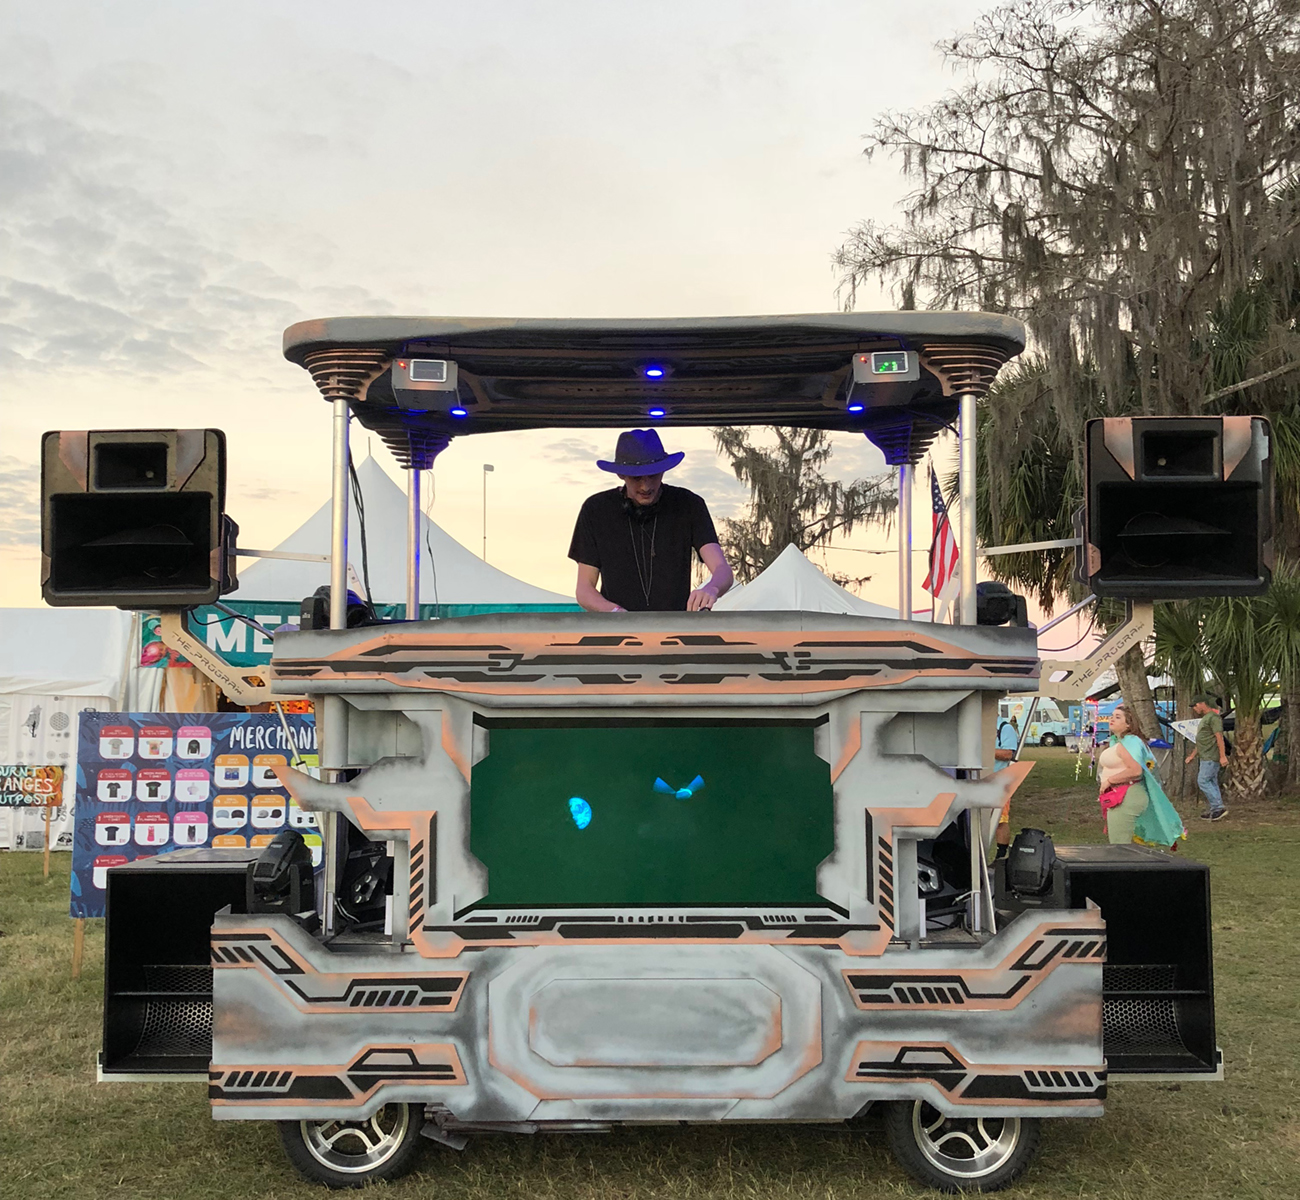 custom fabricated golf cart that plays music. the_program